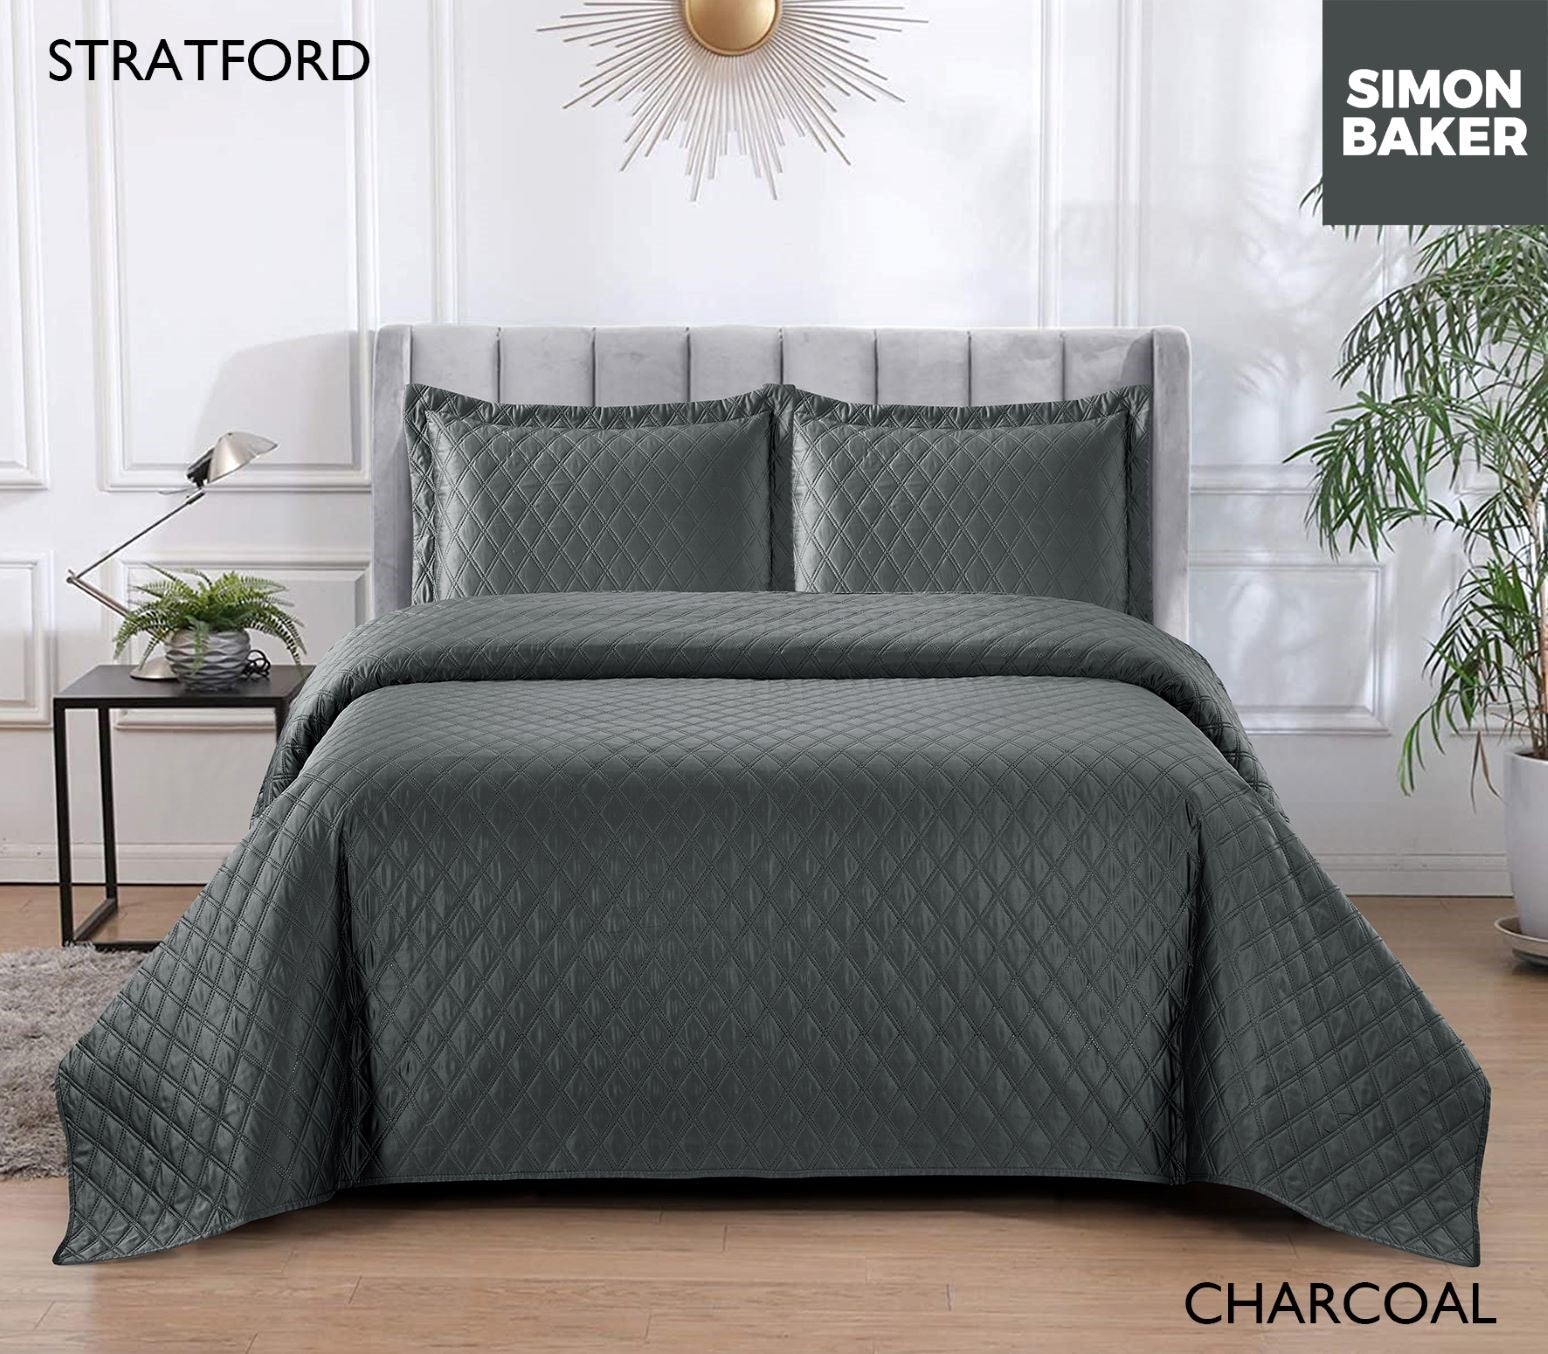 Simon Baker | Stratford Bedspread - Charcoal (Various Sizes)